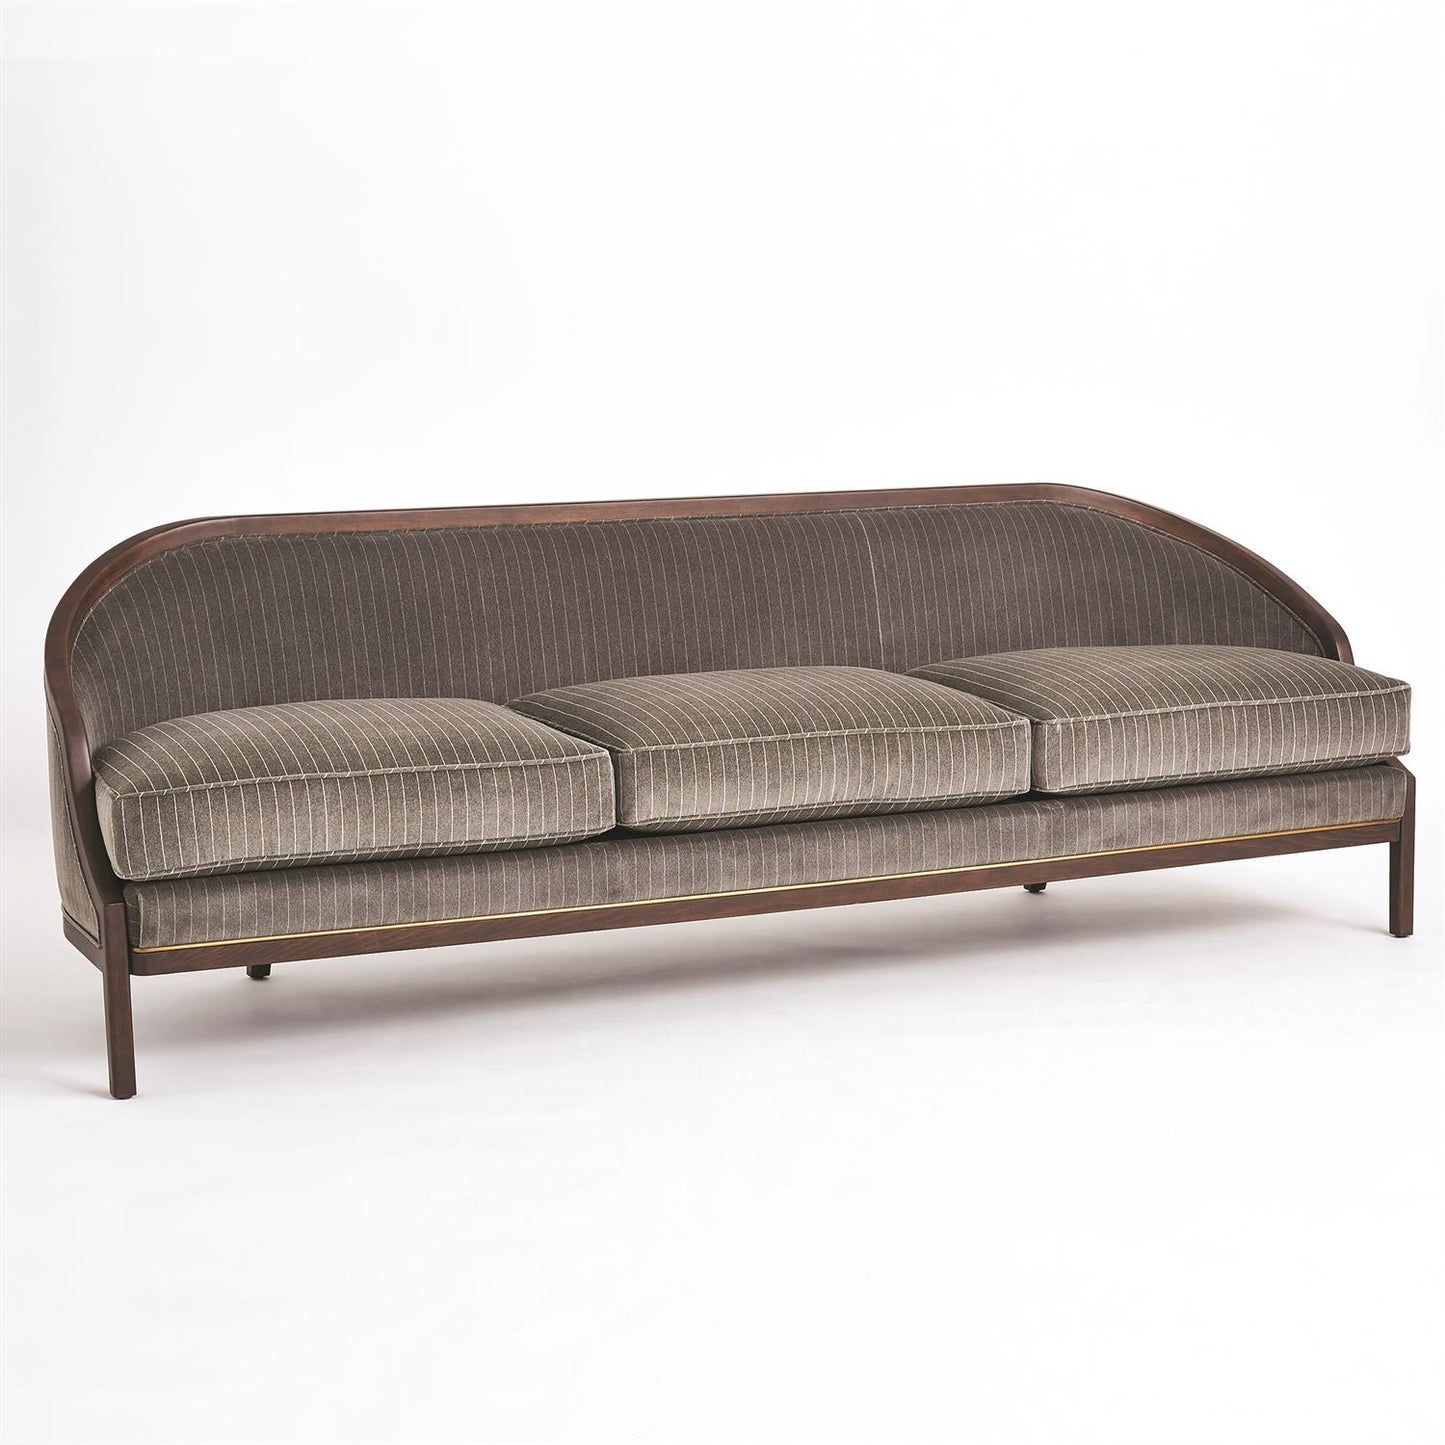 Tailored Sofa - Grats Decor Interior Design & Build Inc.